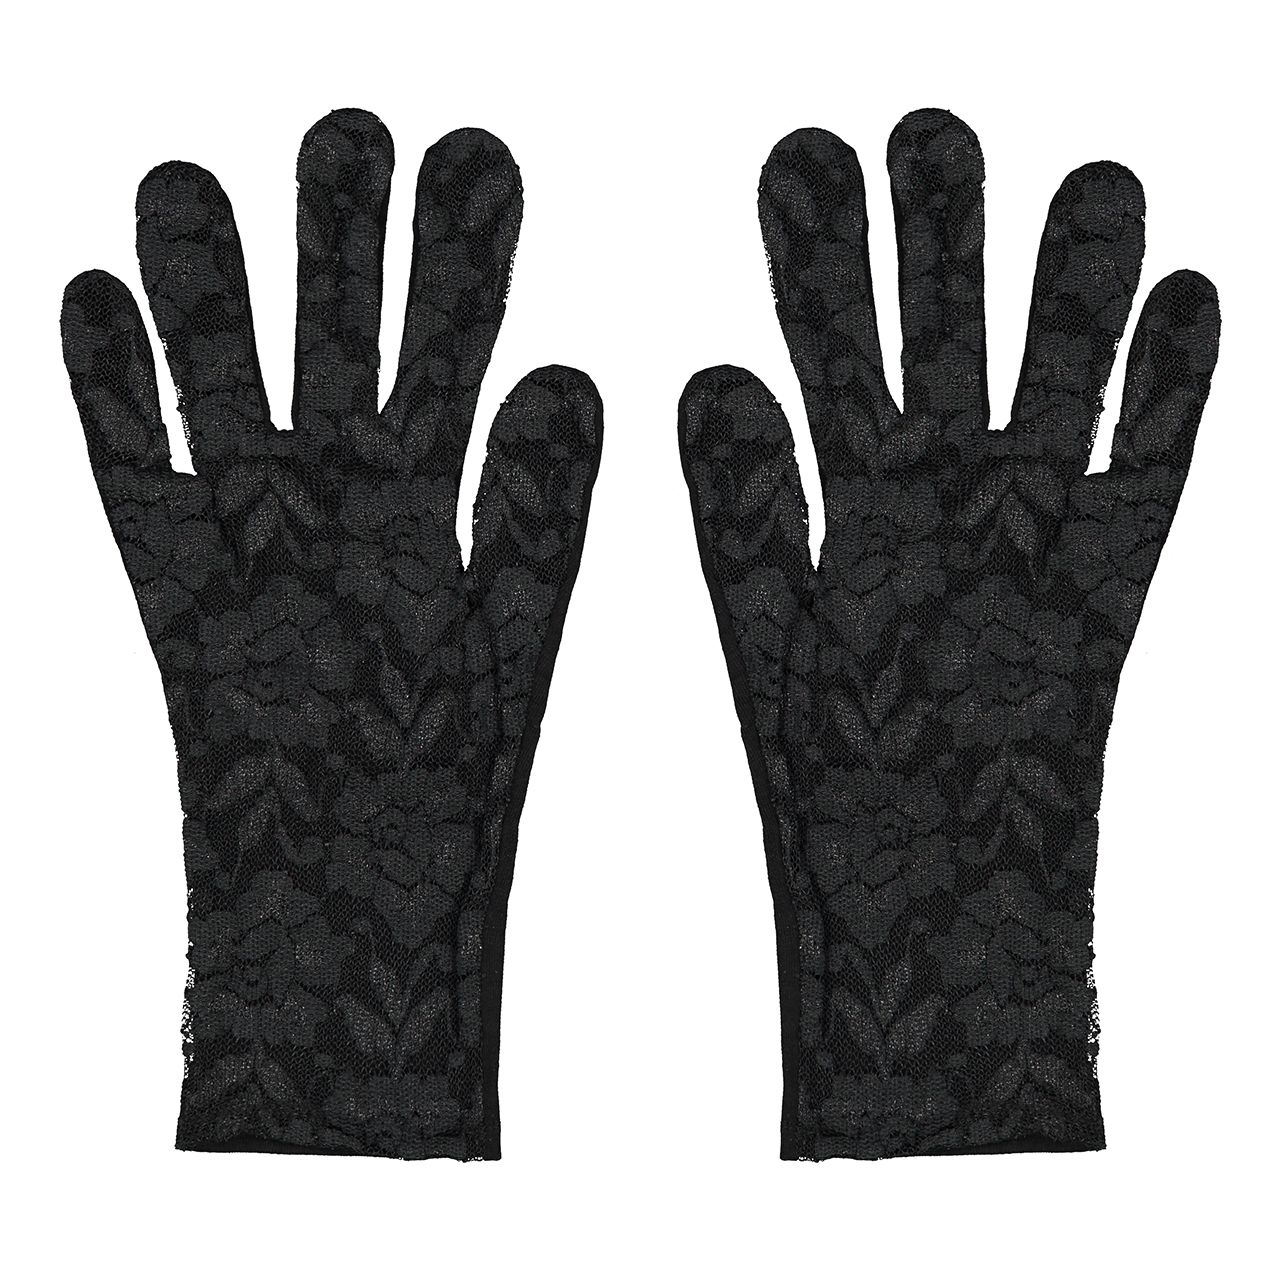 دستکش زنانه تادو مدل Lace Gloves B -  - 1